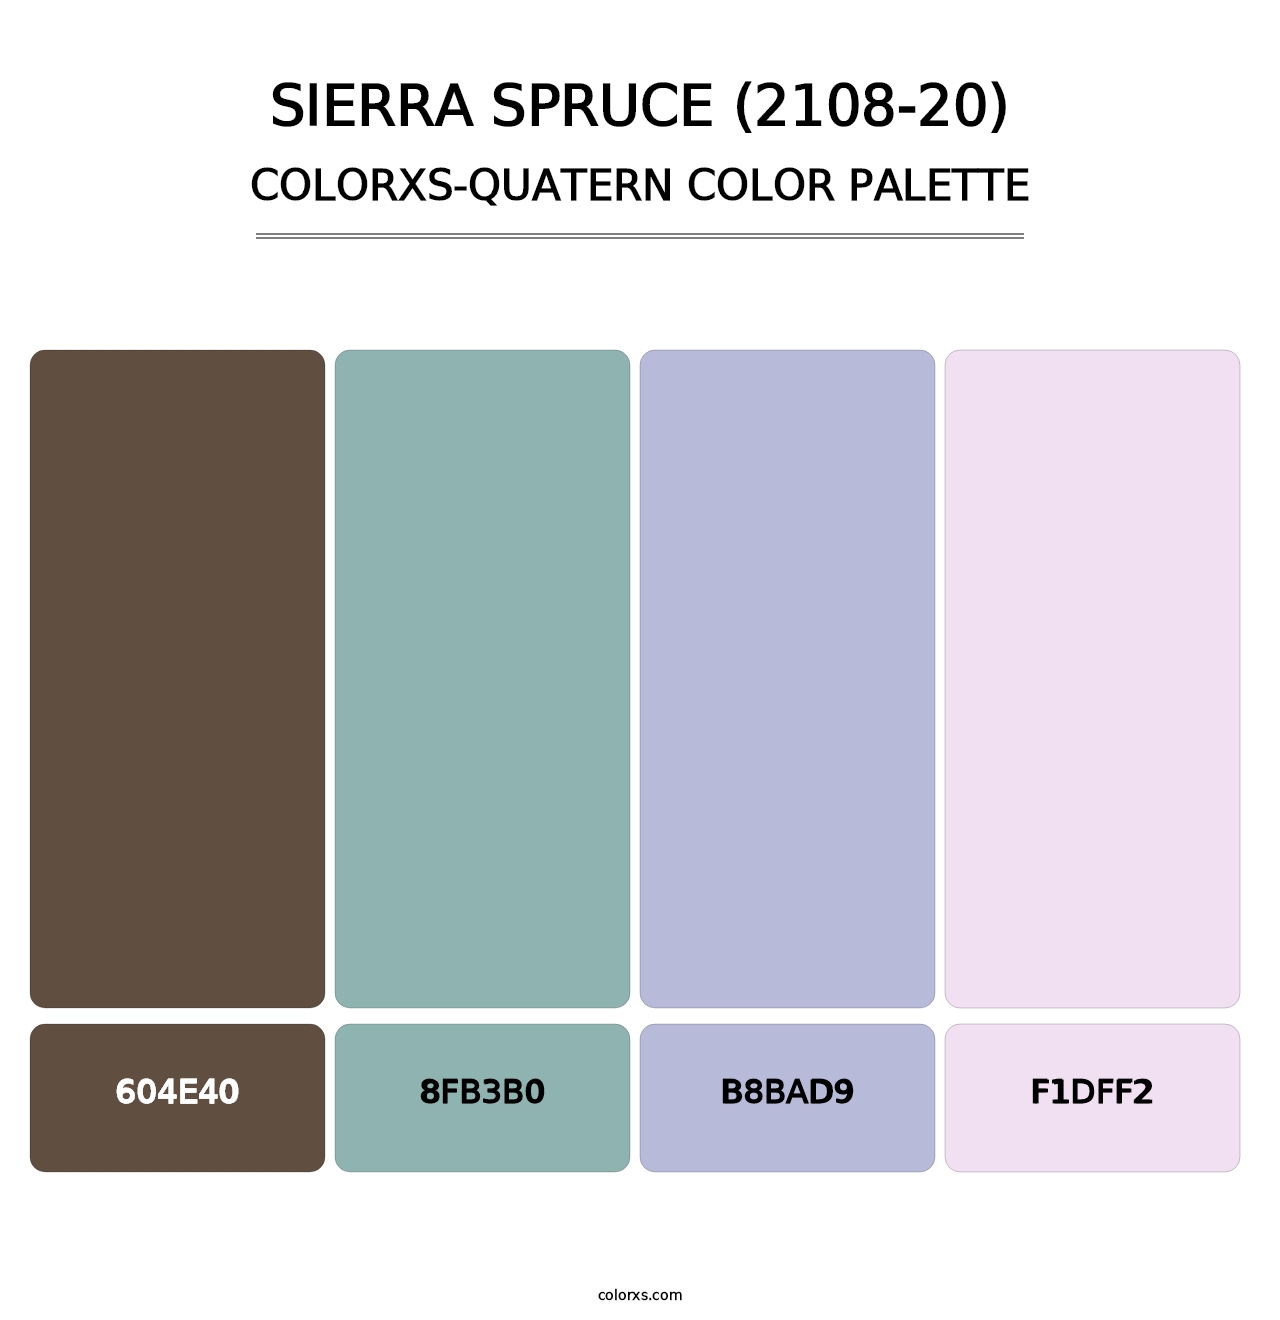 Sierra Spruce (2108-20) - Colorxs Quatern Palette